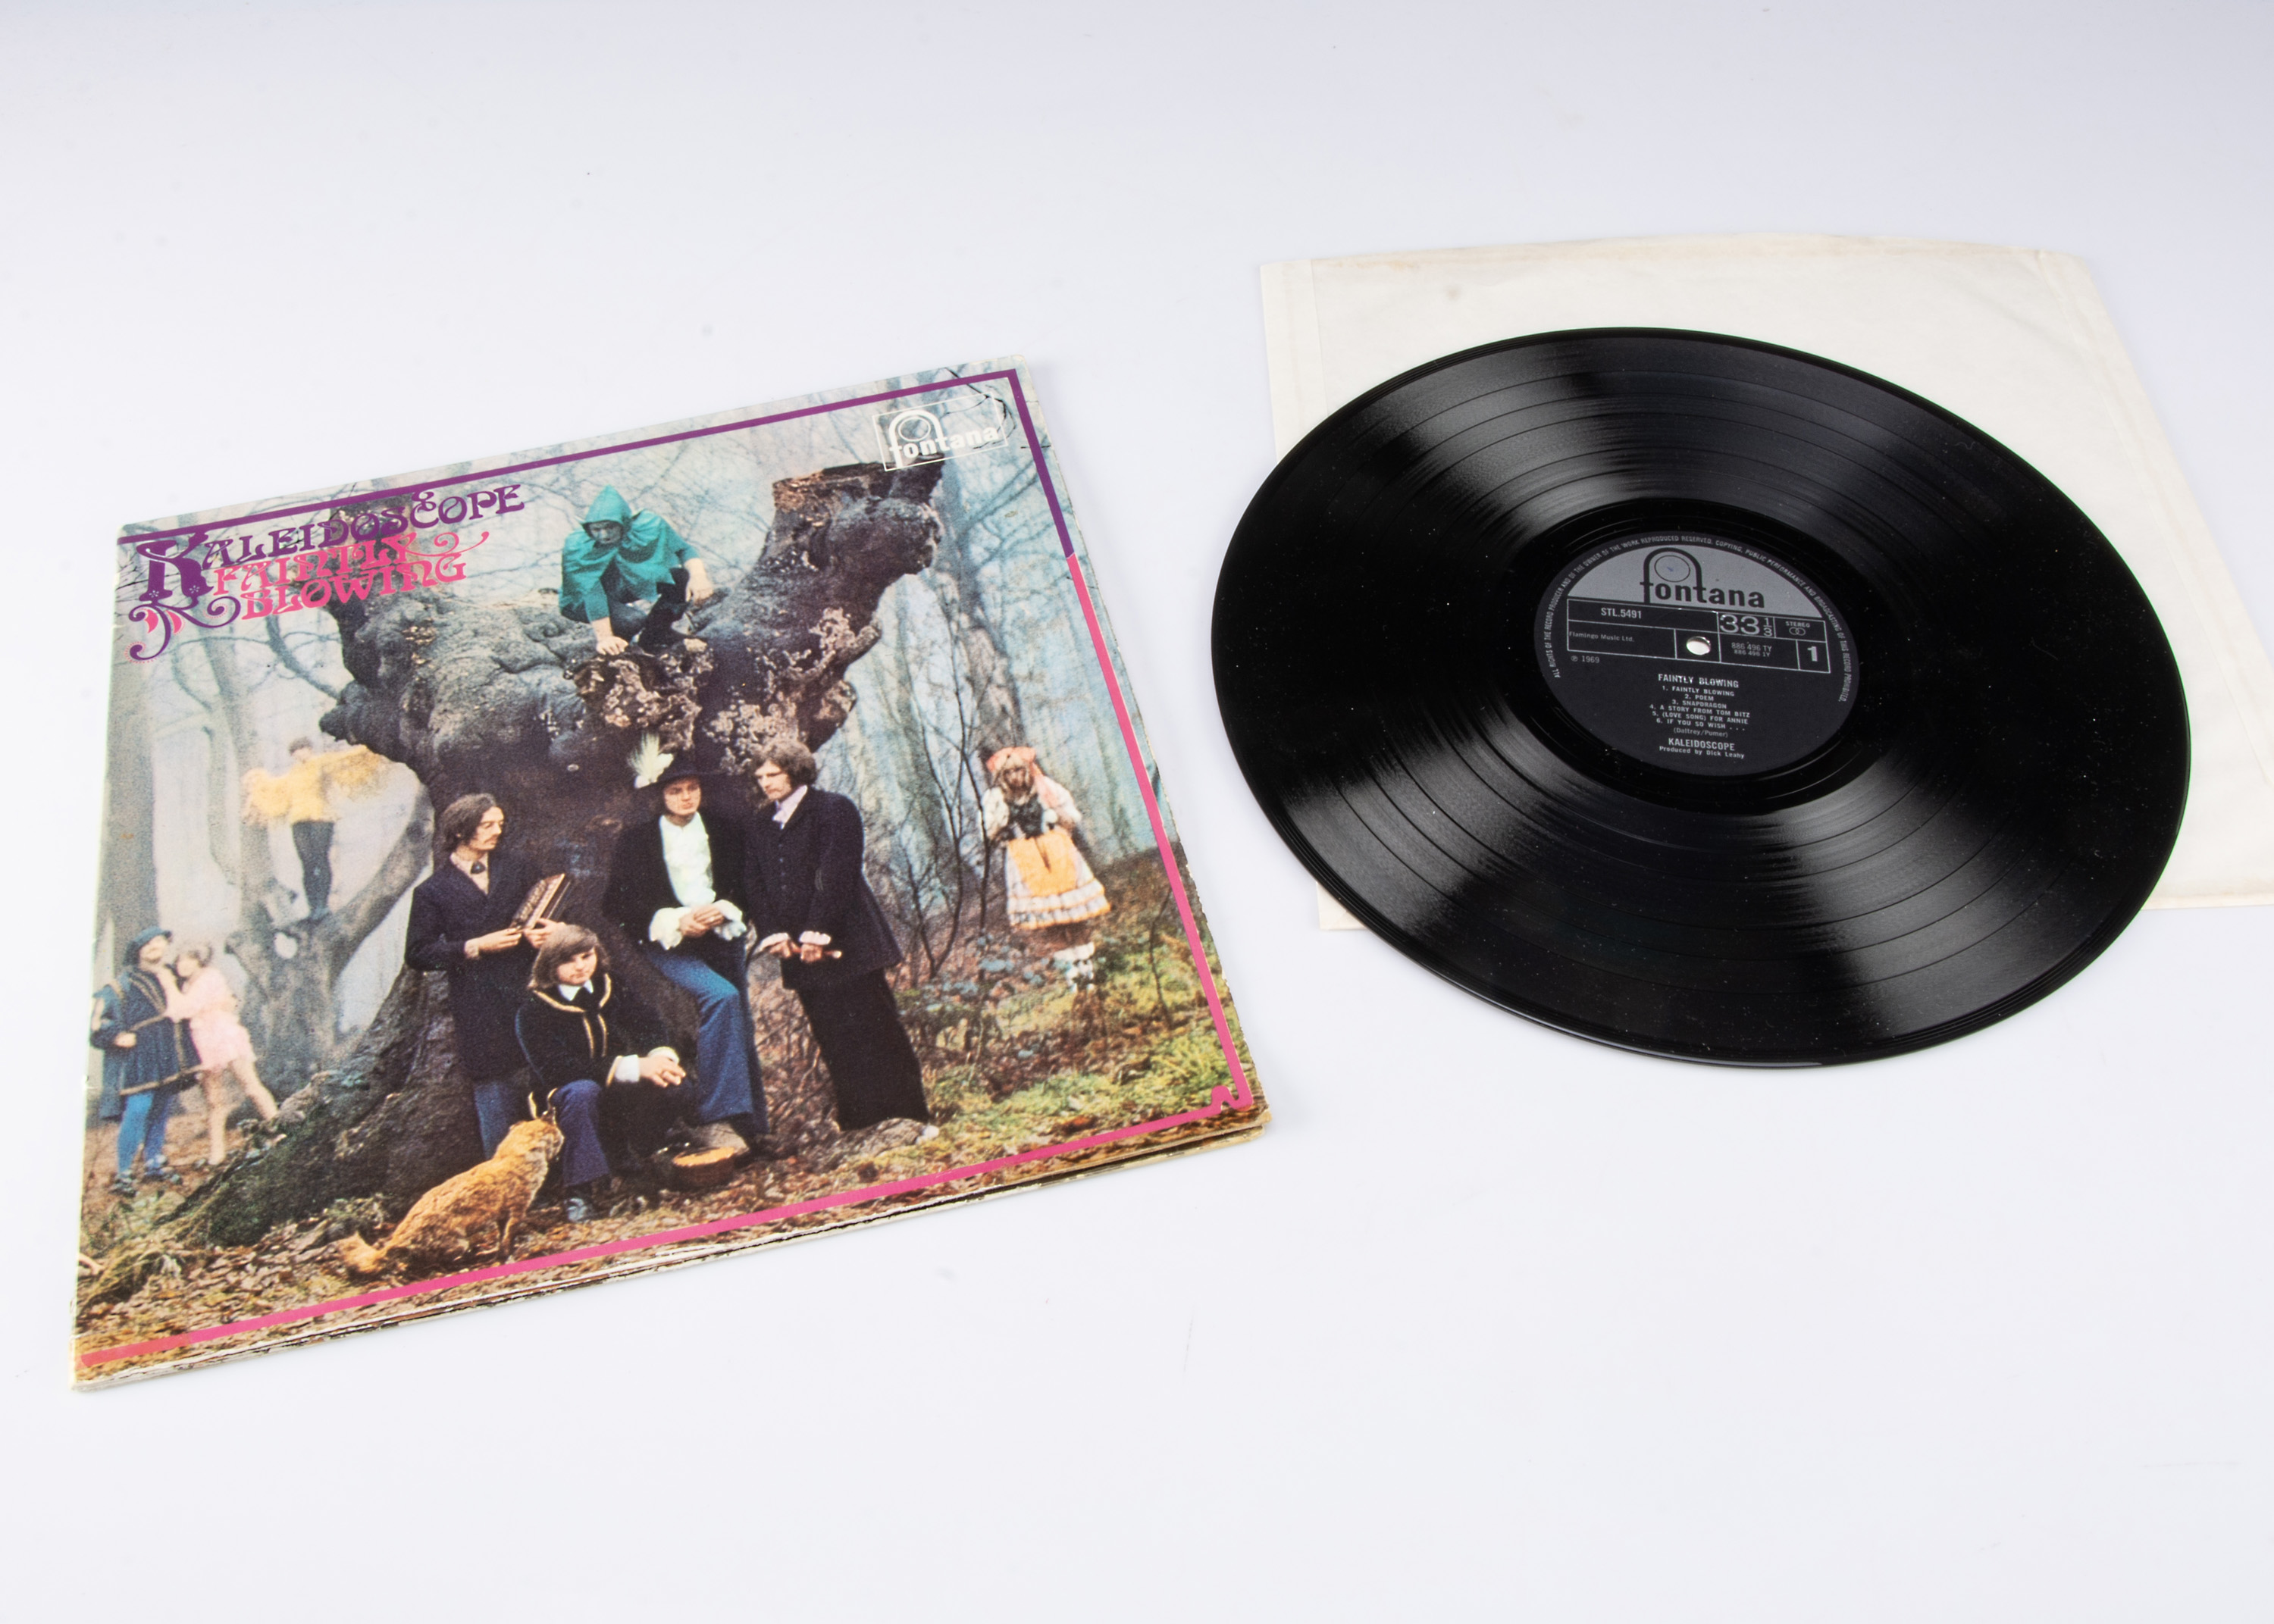 Lot 12 - Kaleidoscope LP, Faintly Blowing LP - Original UK Stereo Release 1969 on Fontana